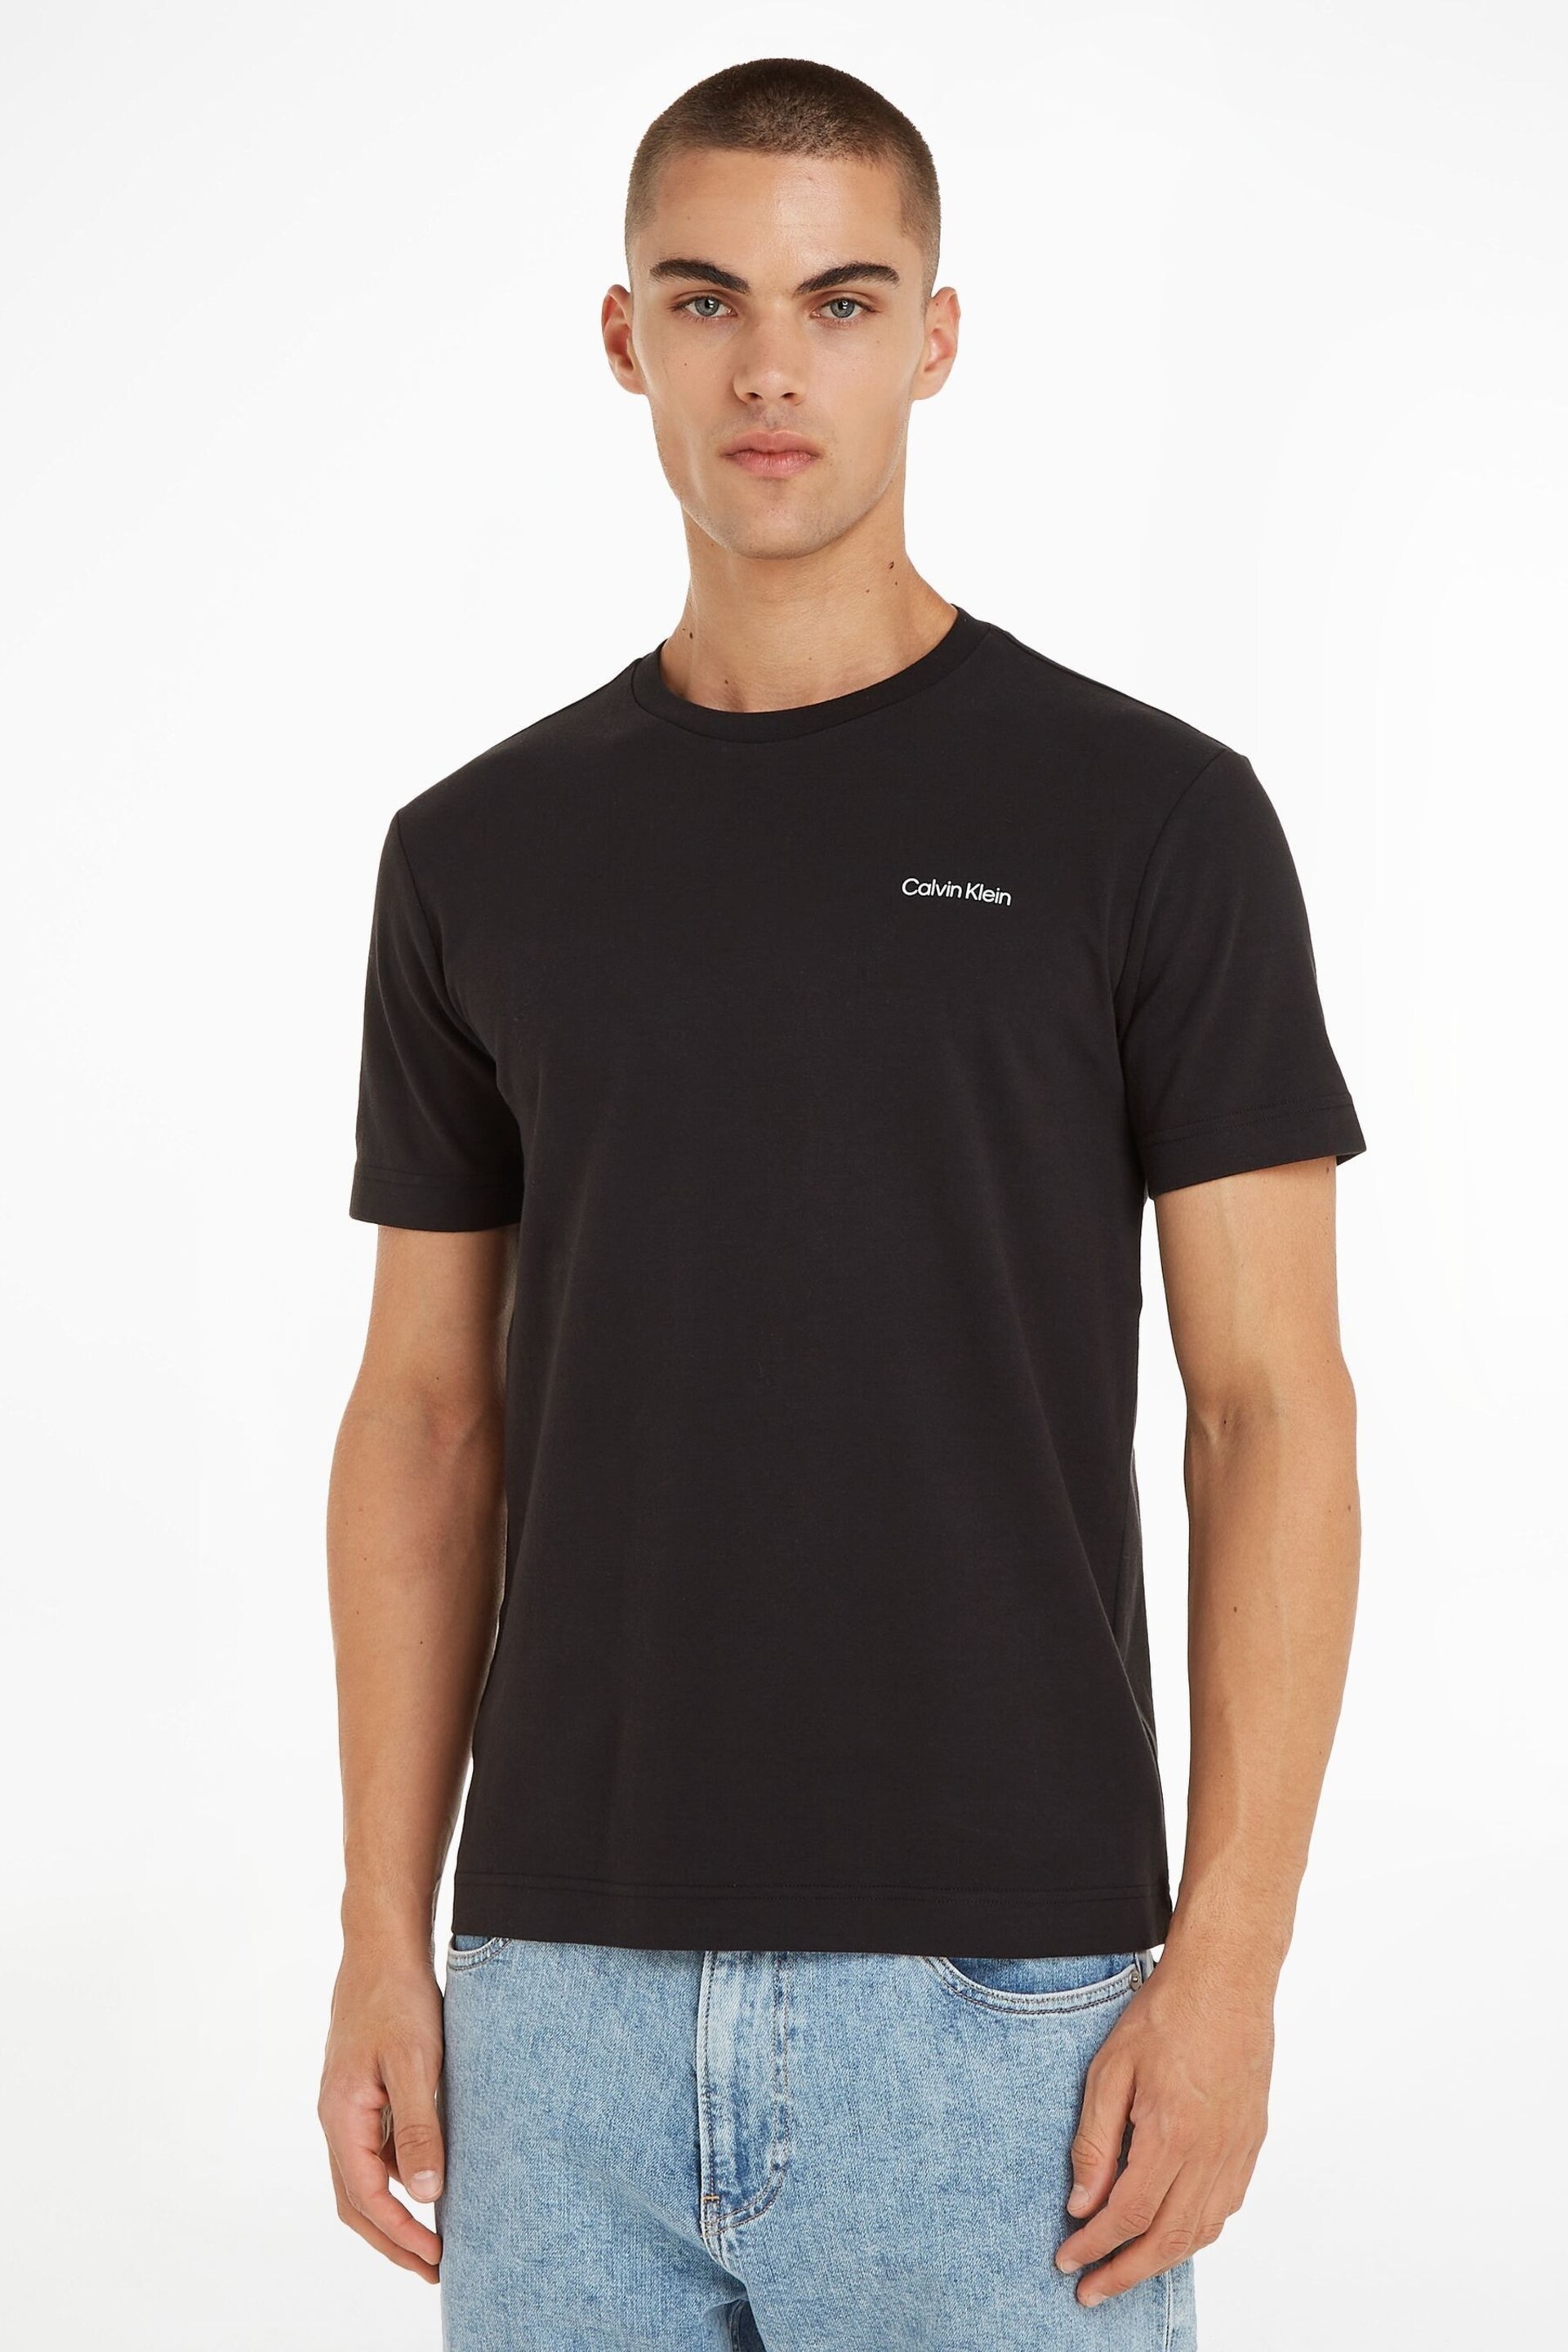 Calvin Klein Black Micro Logo T-Shirt - Image 1 of 4